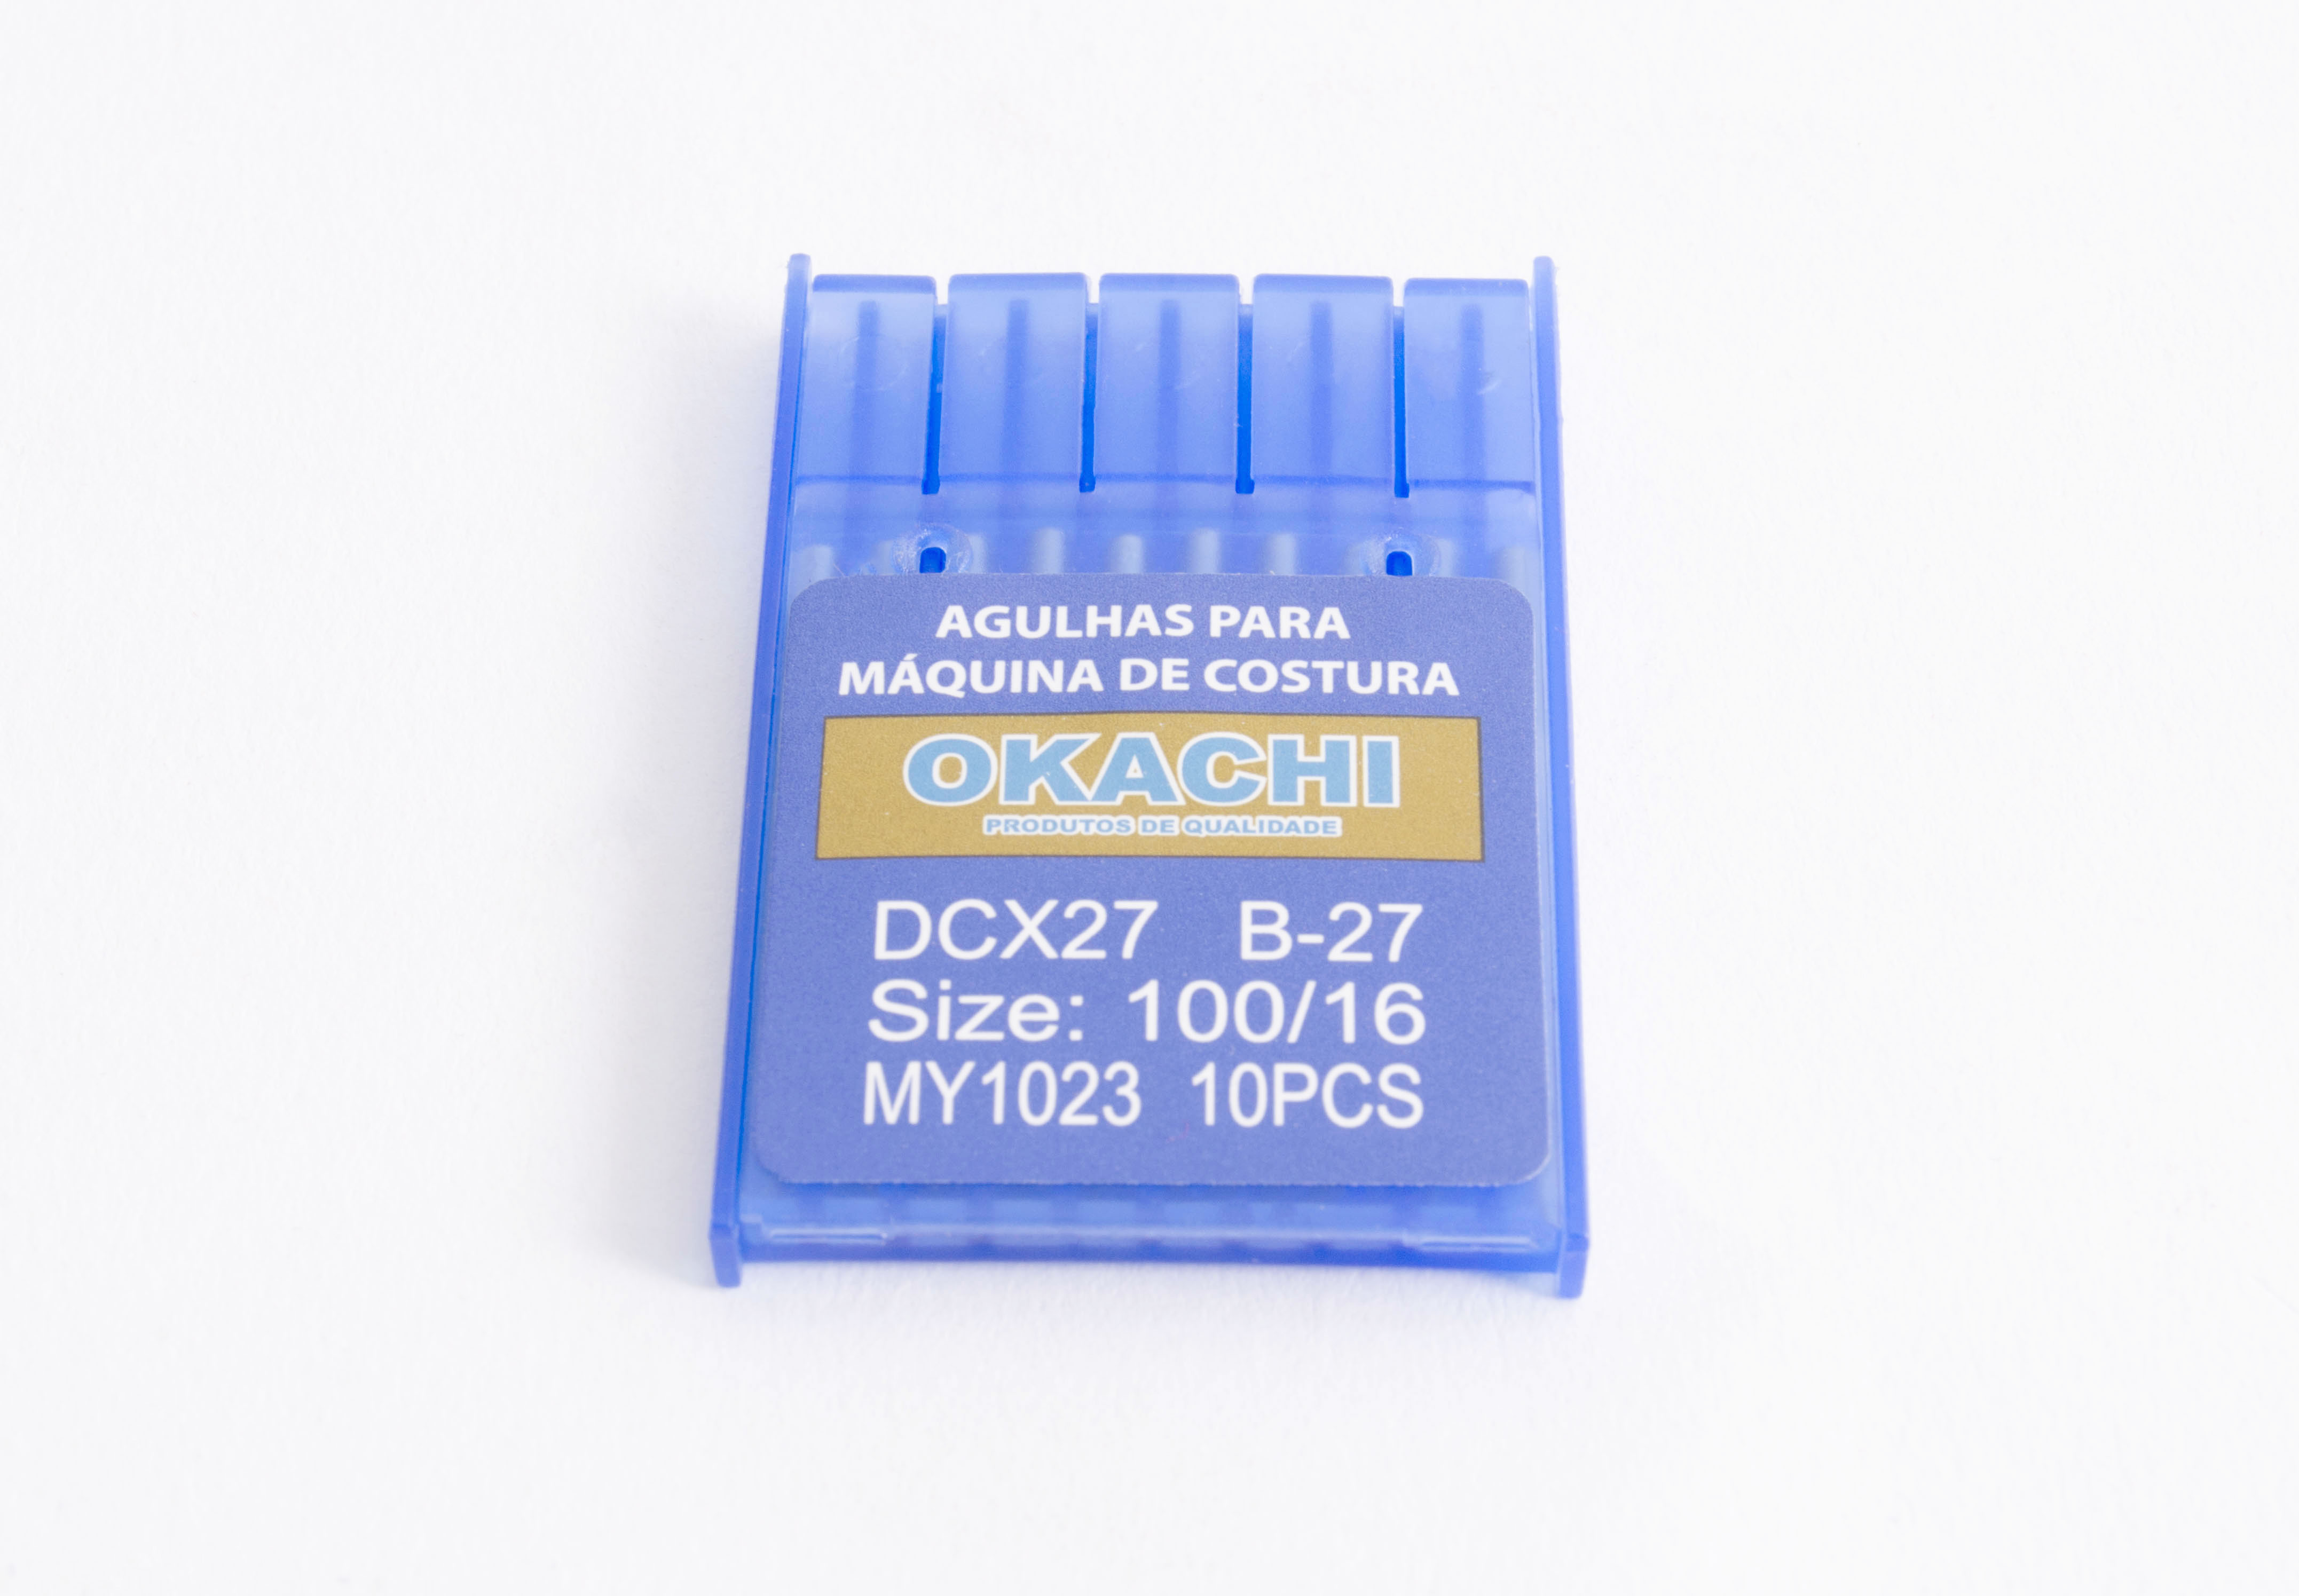 Agulha Overlock Interlock com 10 DC27 16 Okachi